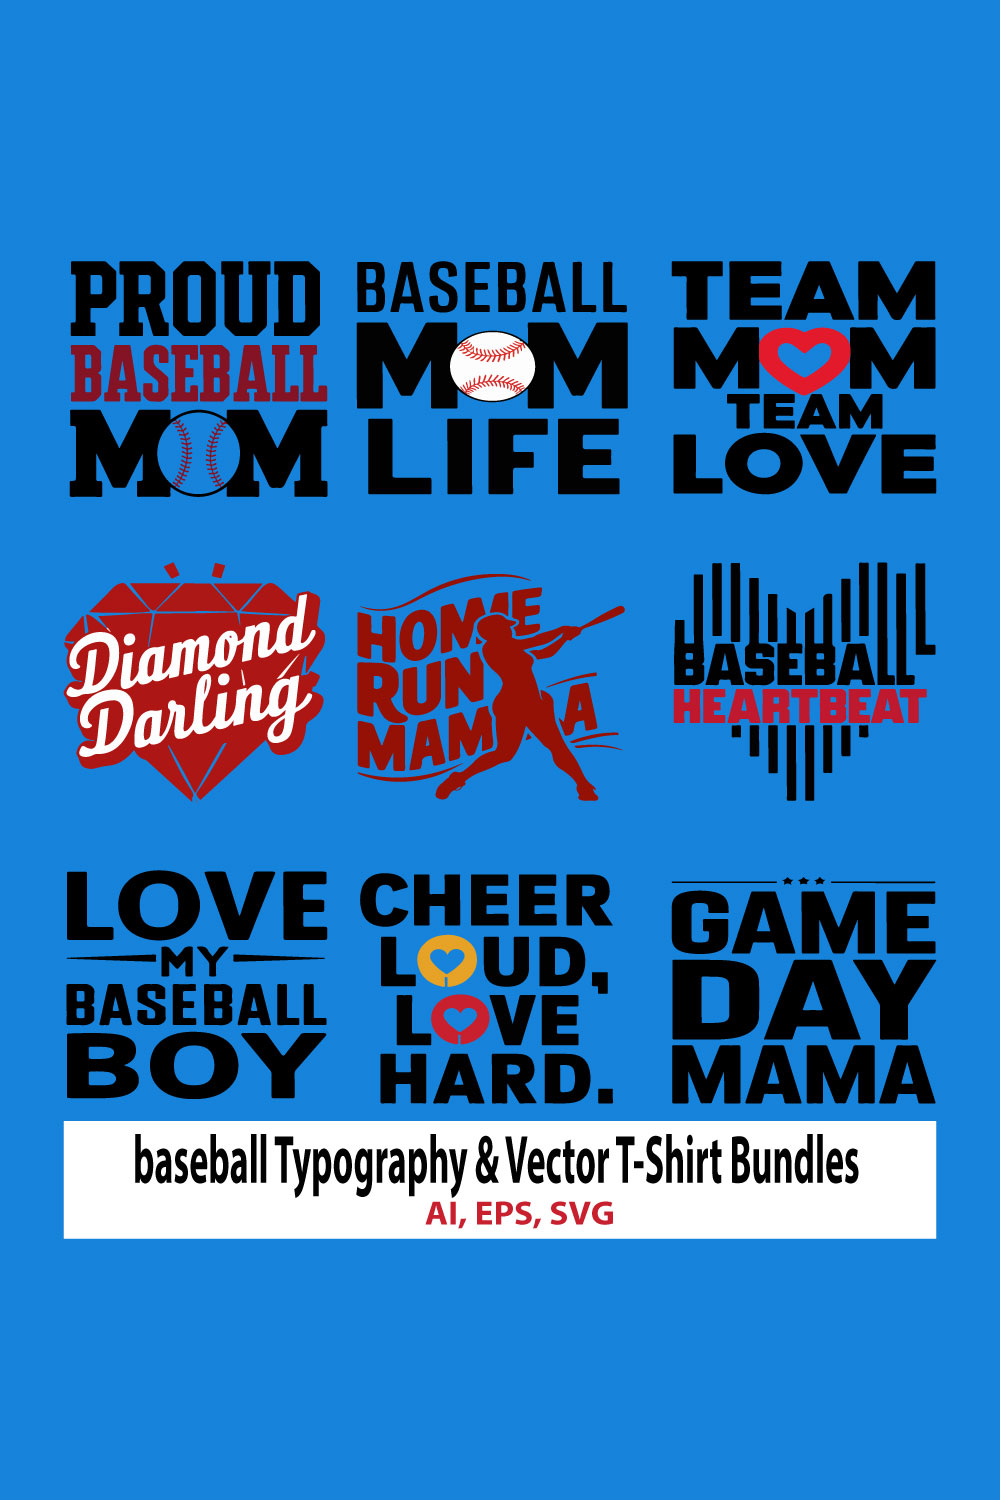 baseball Typography & Vector T-Shirt Bundles pinterest preview image.